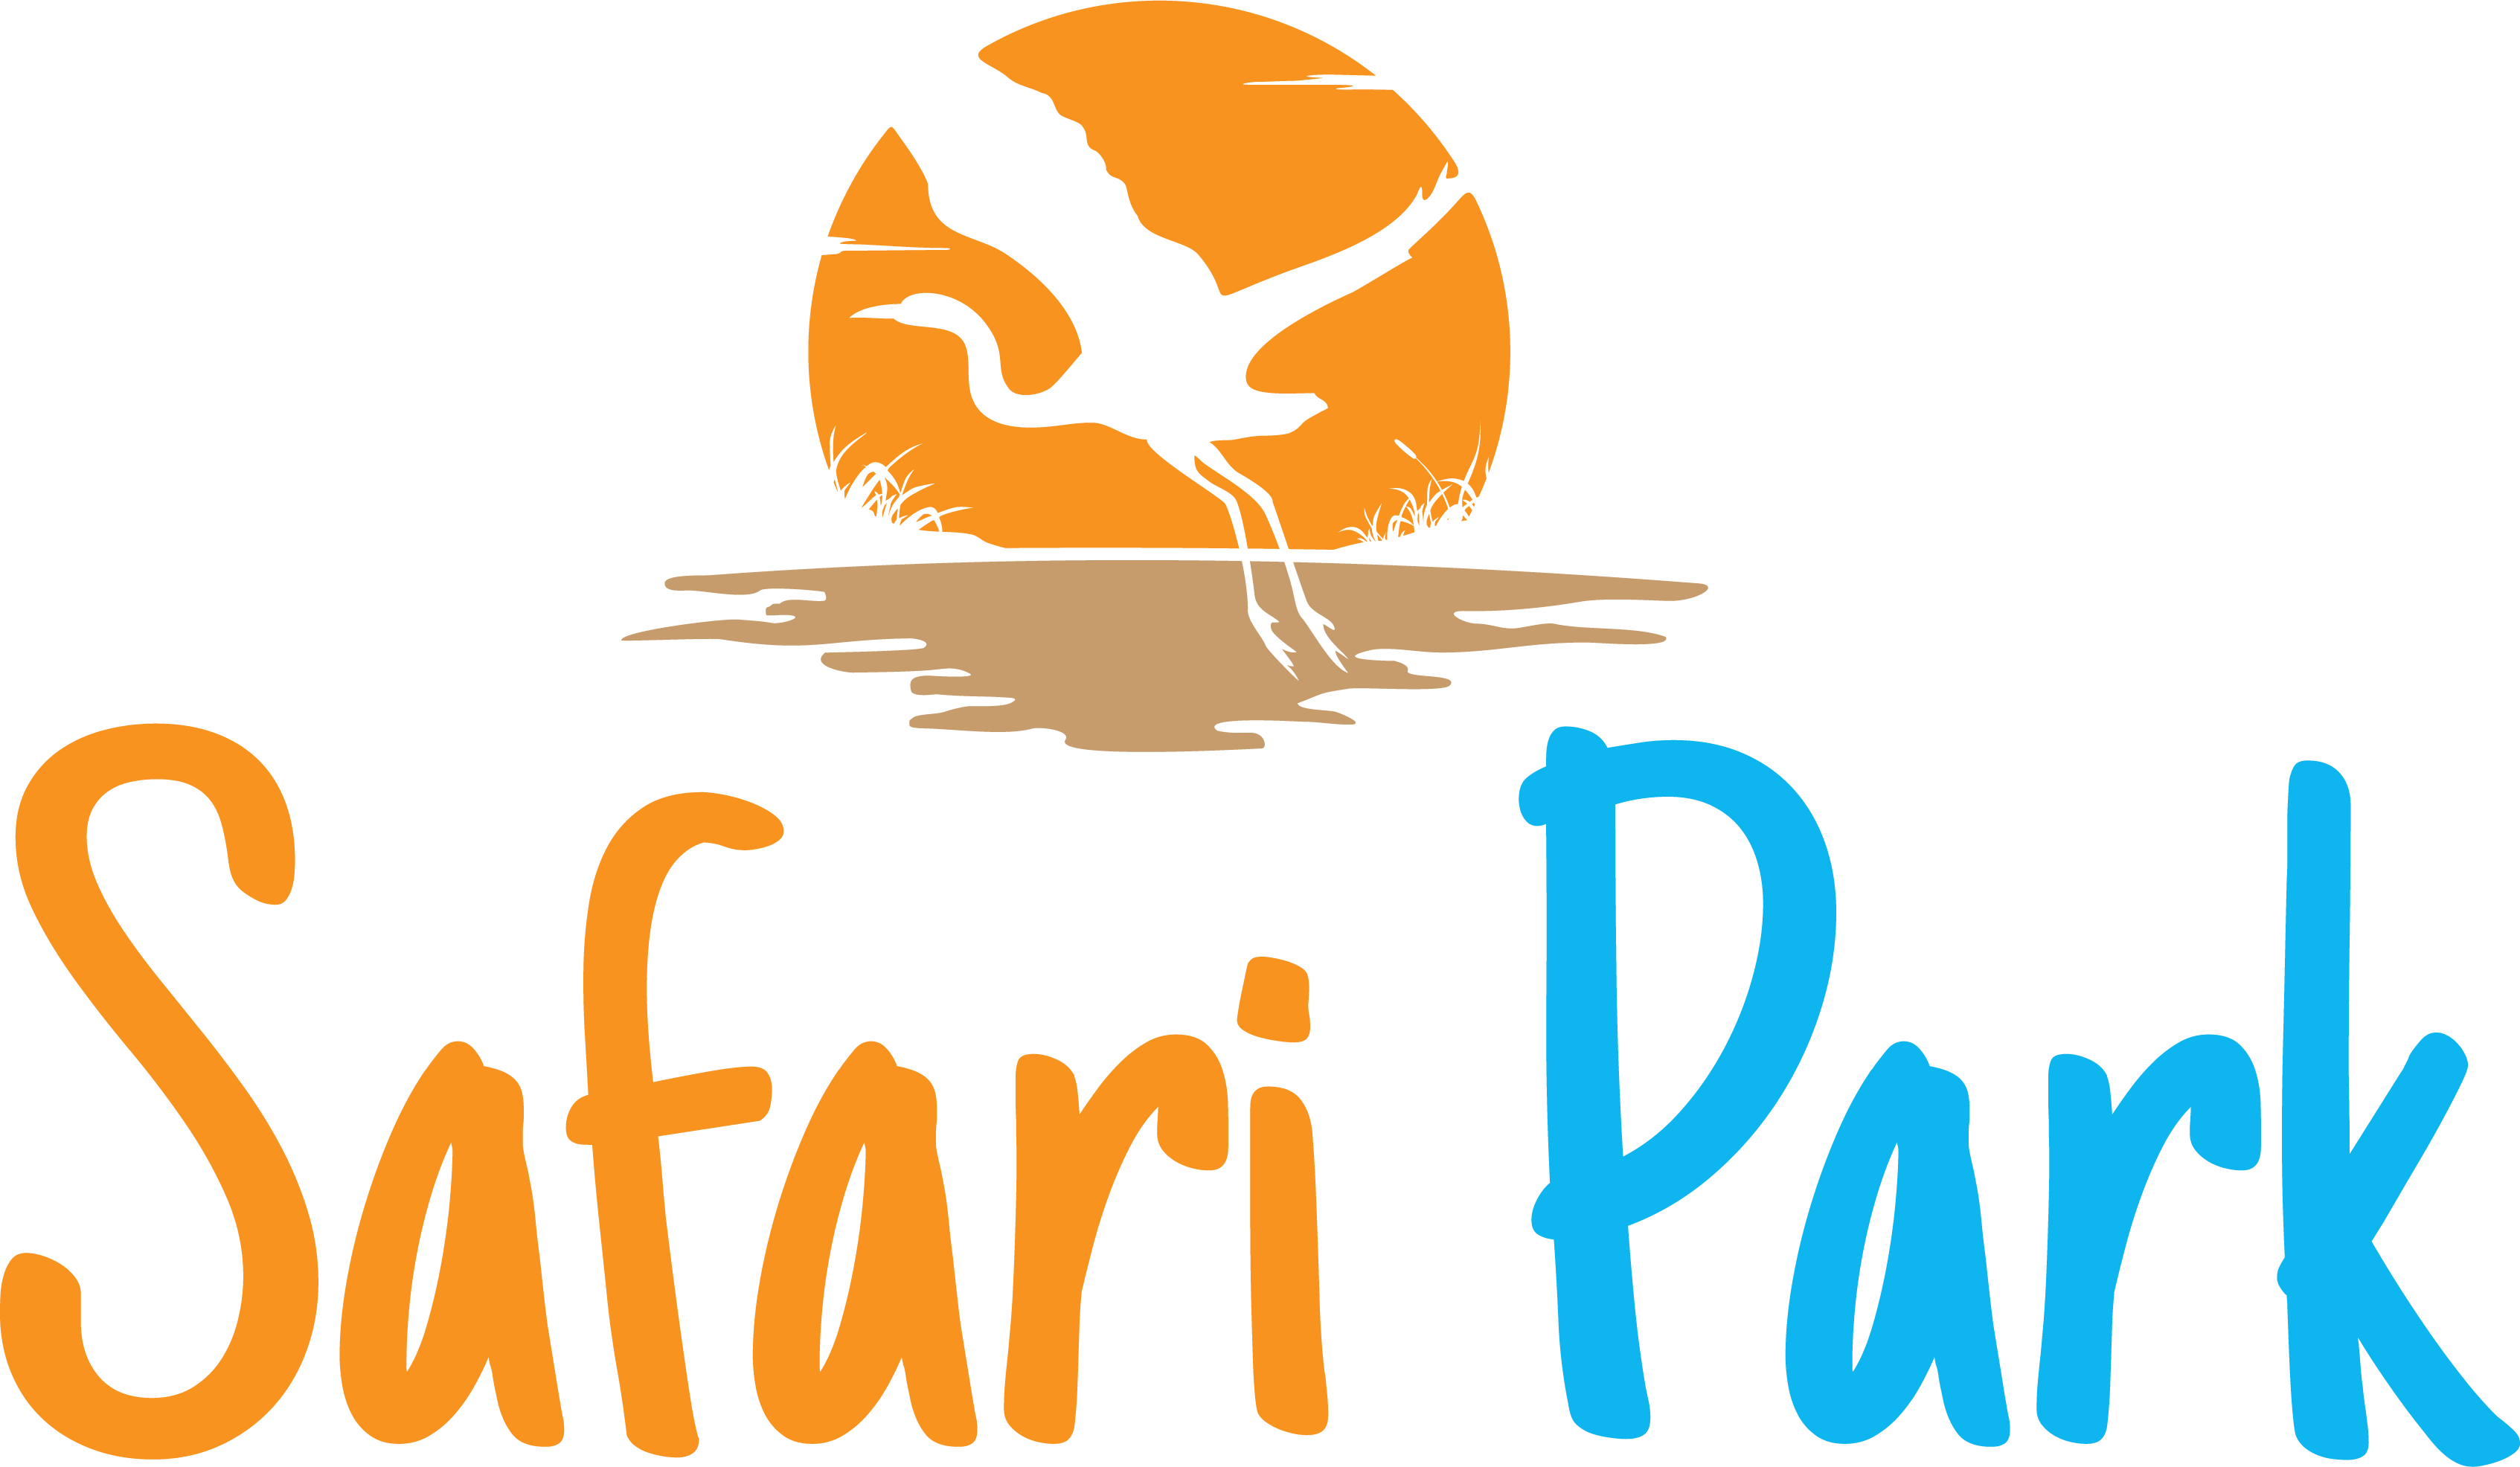 (c) Safaripark.org